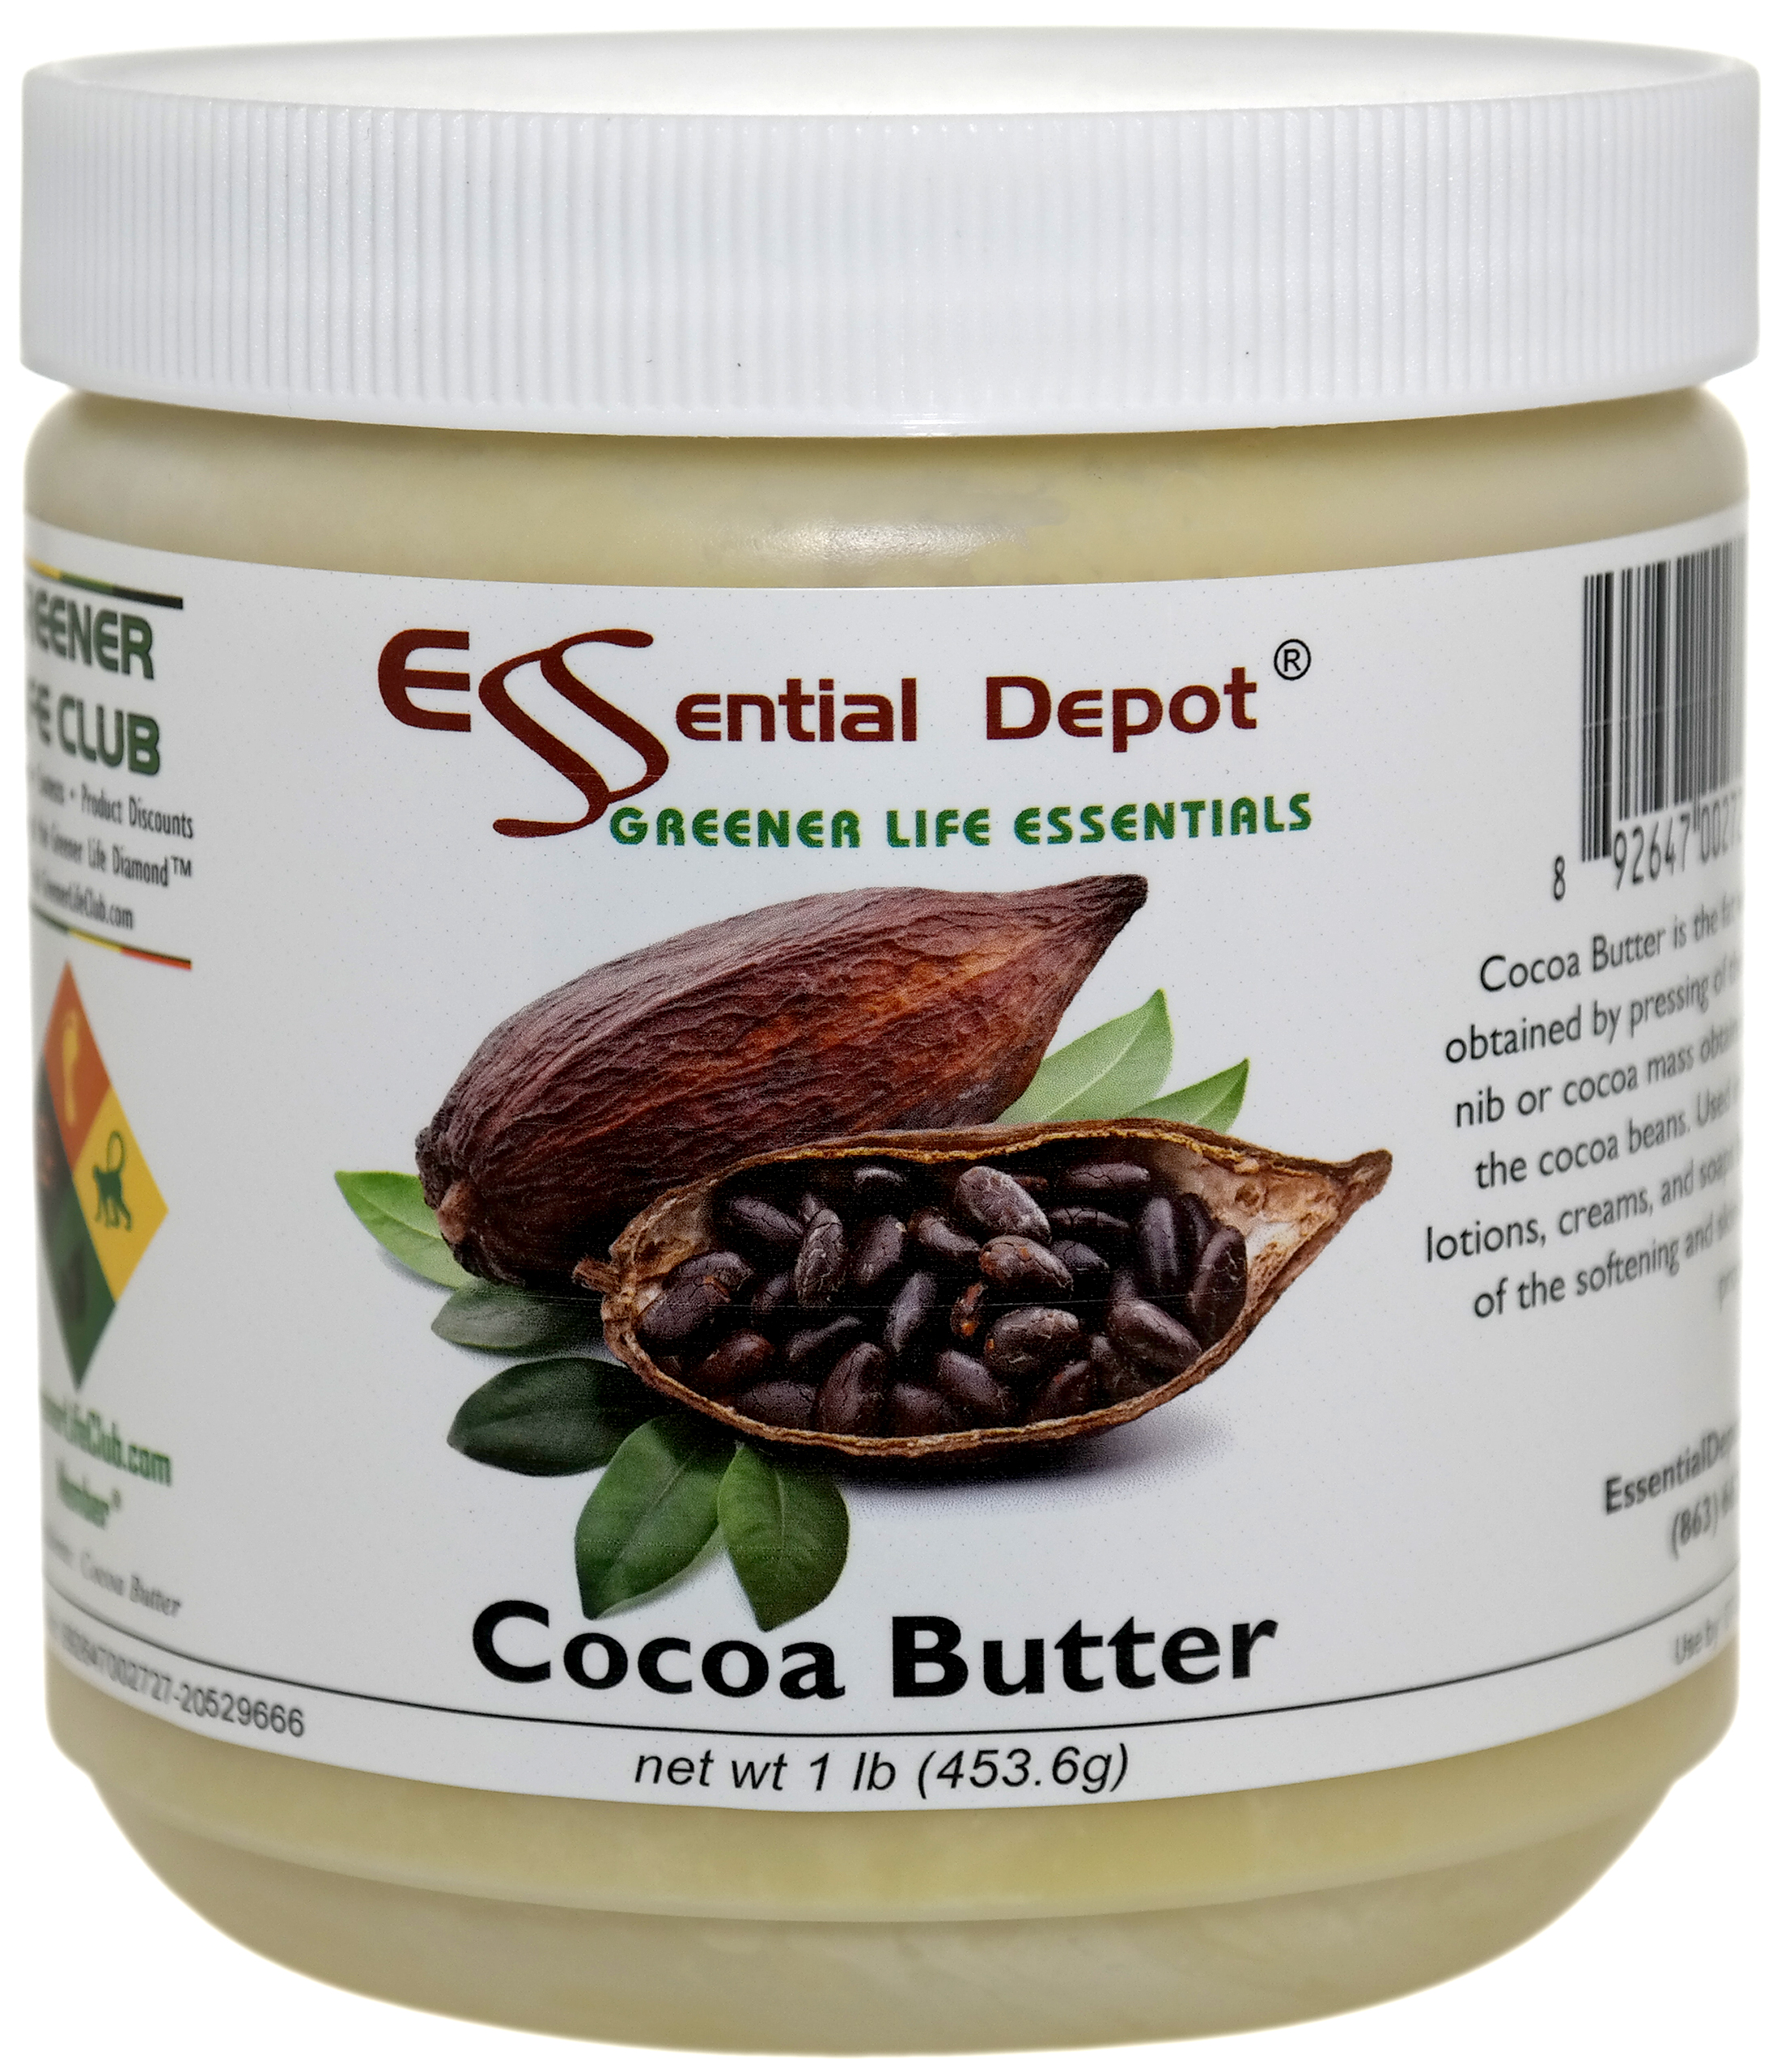 Cocoa Butter - Organic - Unrefined - 1 lbs net wt: Essential Depot